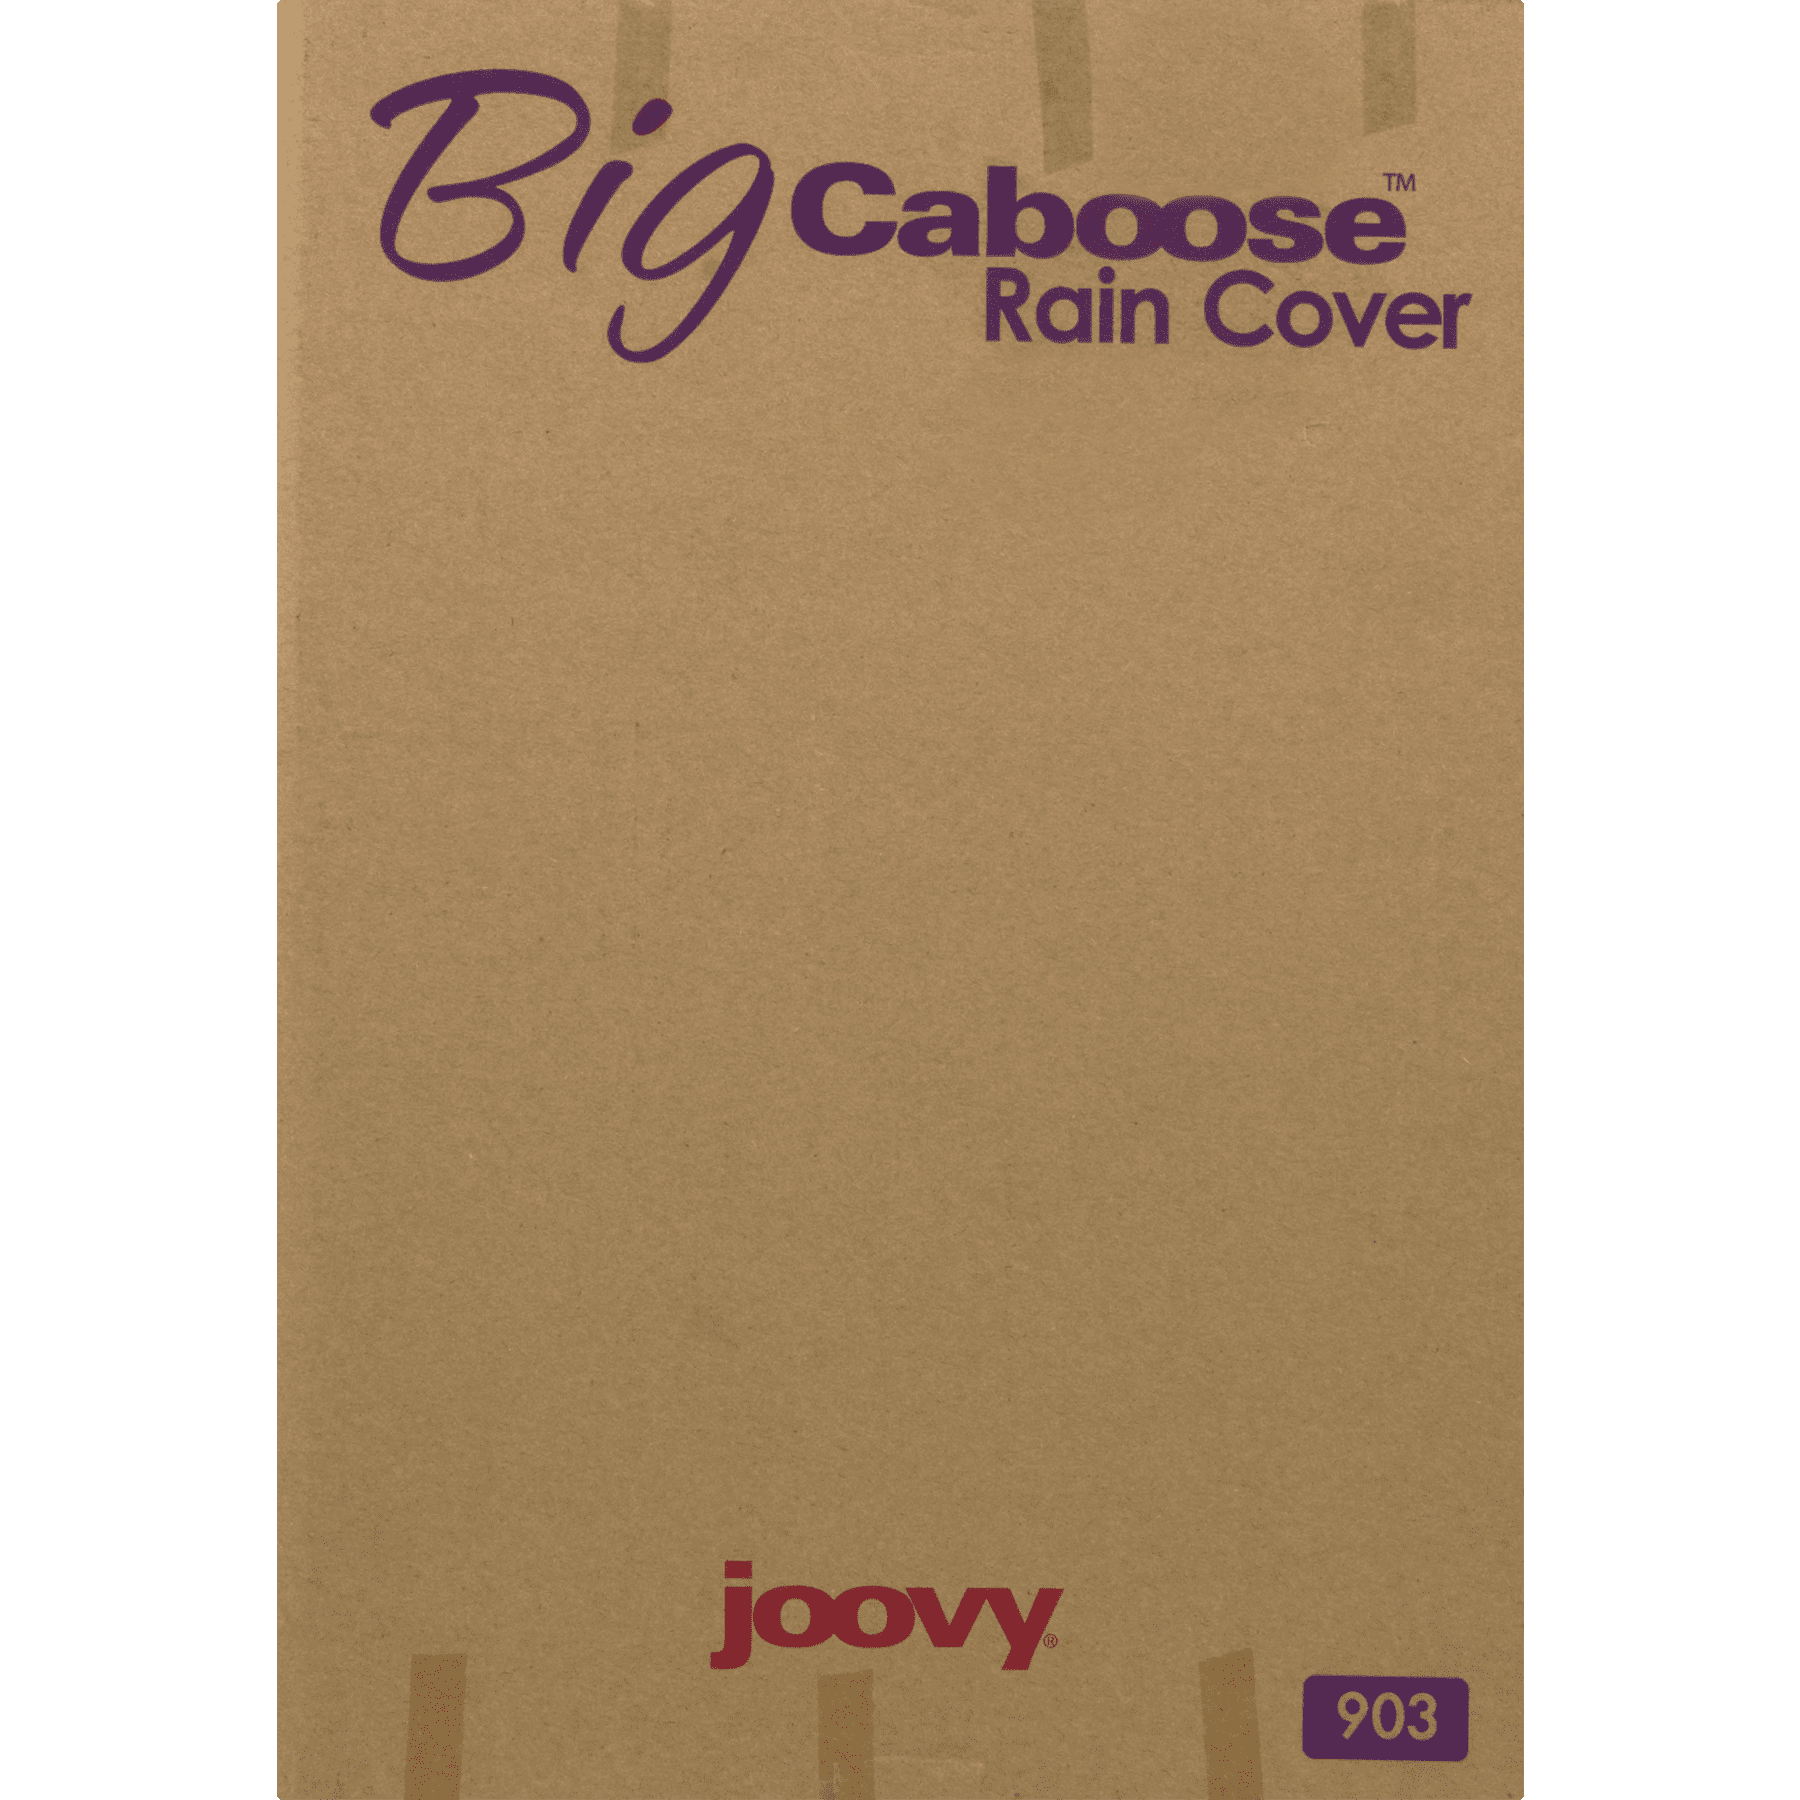 joovy caboose rain cover